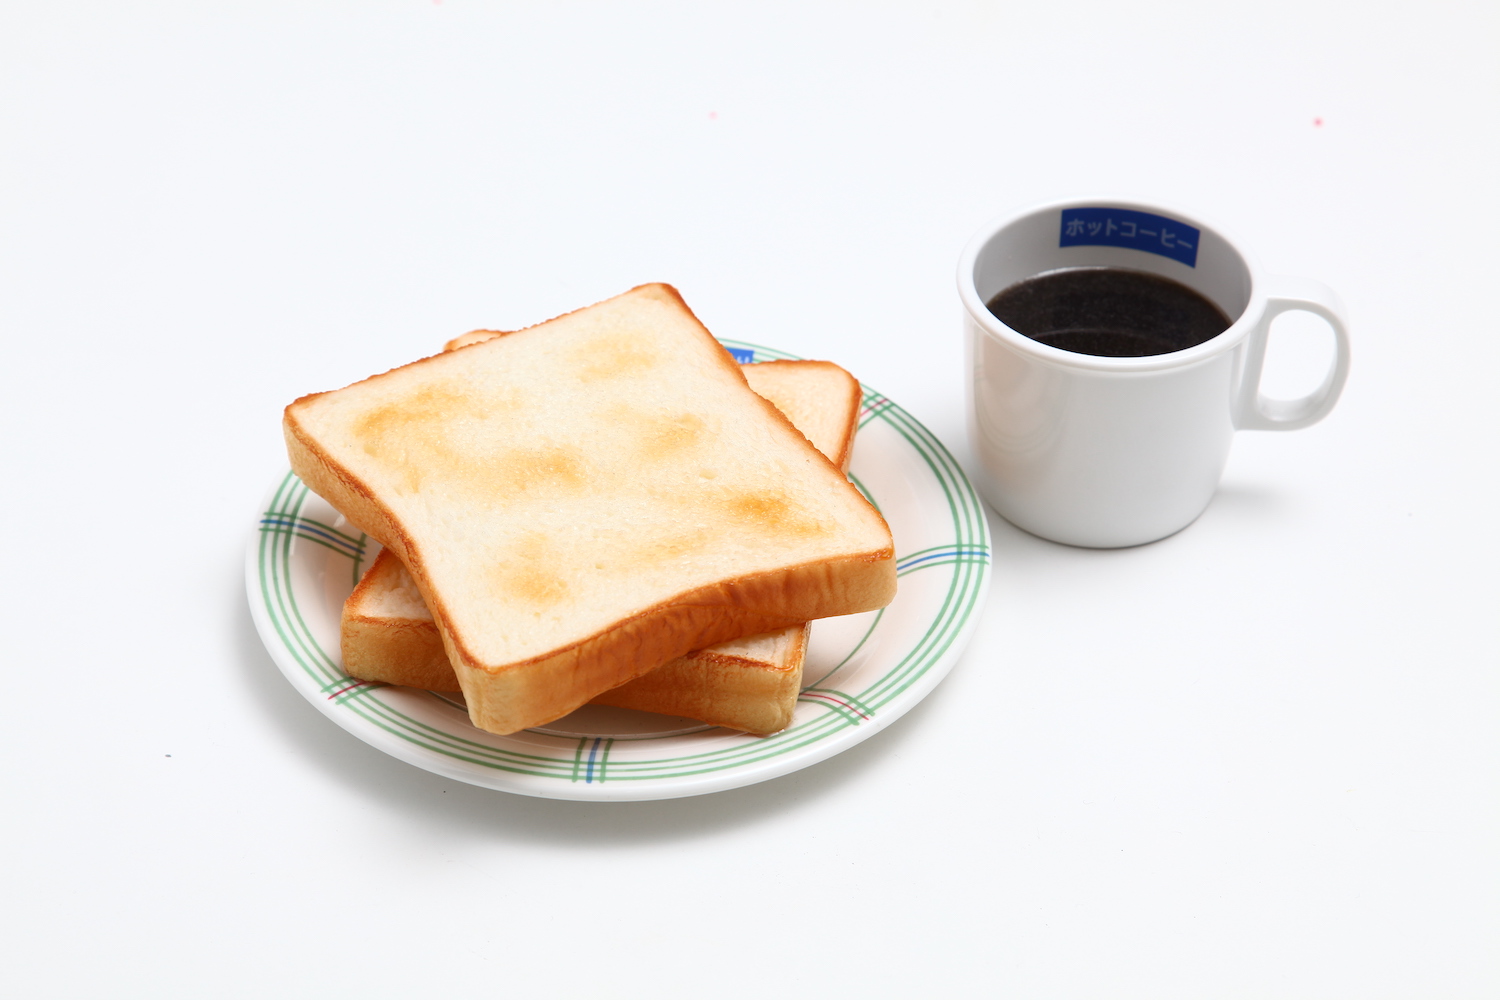 Fake Food - Toast and Coffee